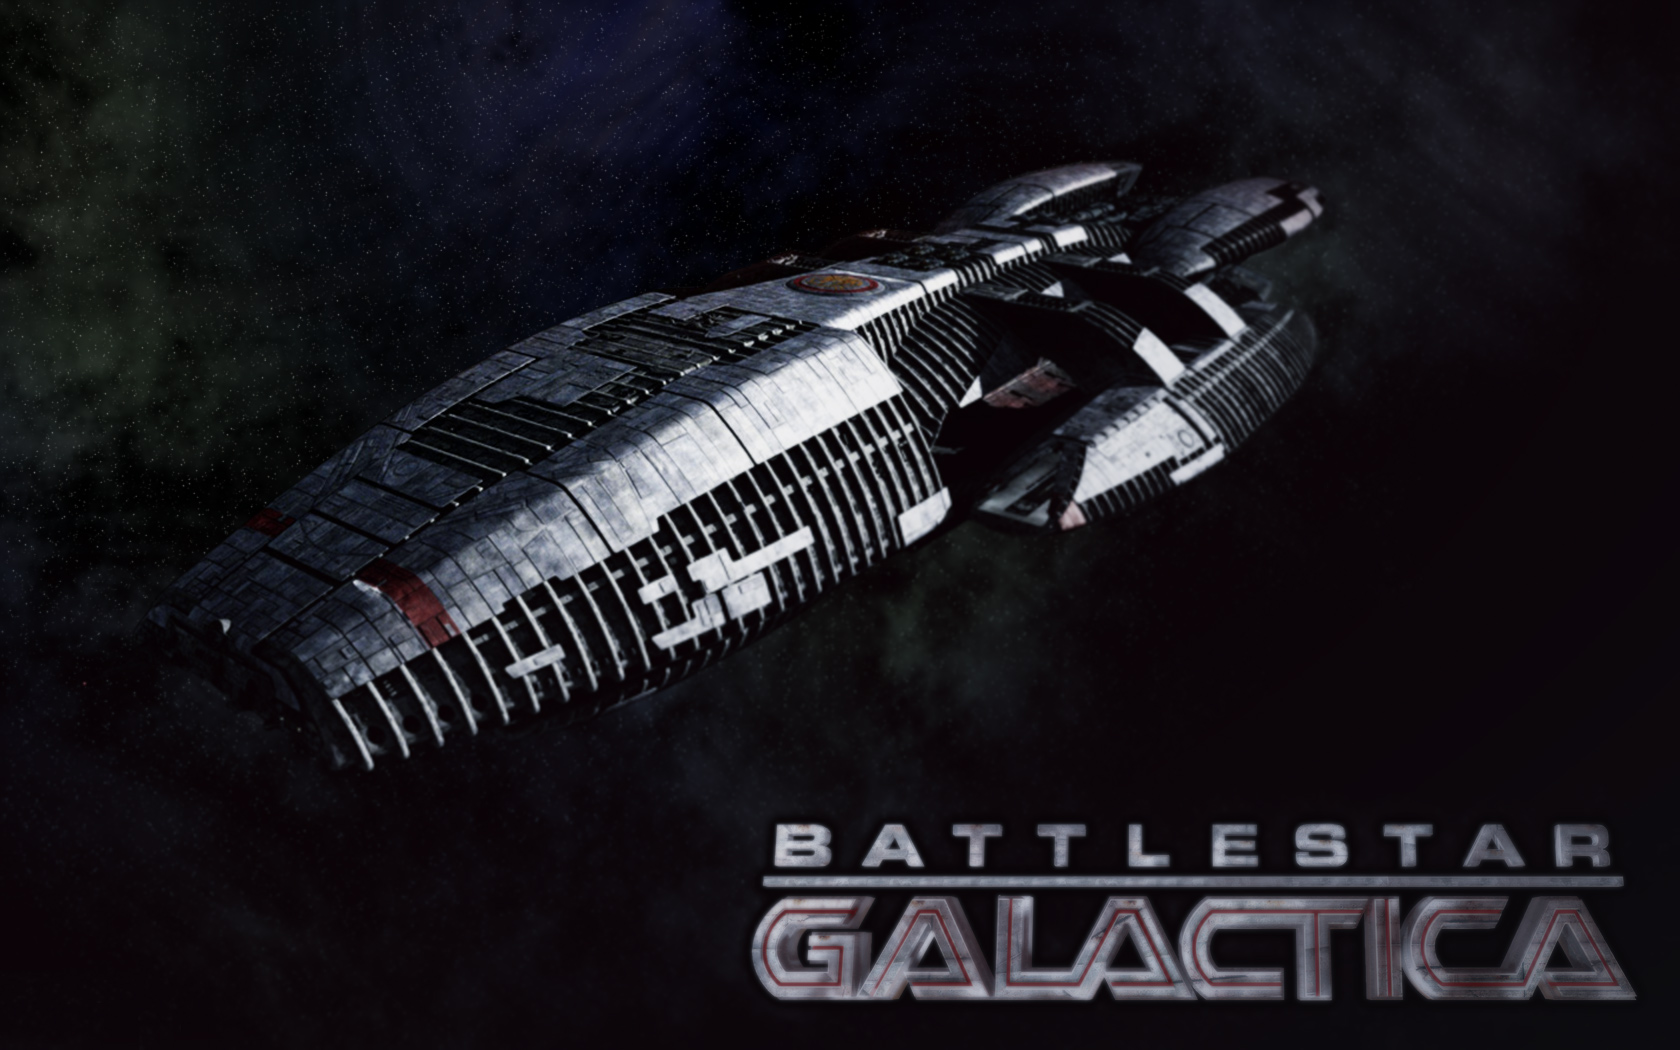 Battlestar Galactica Science Fiction Spaceships Vehicles Wallpaper Hq